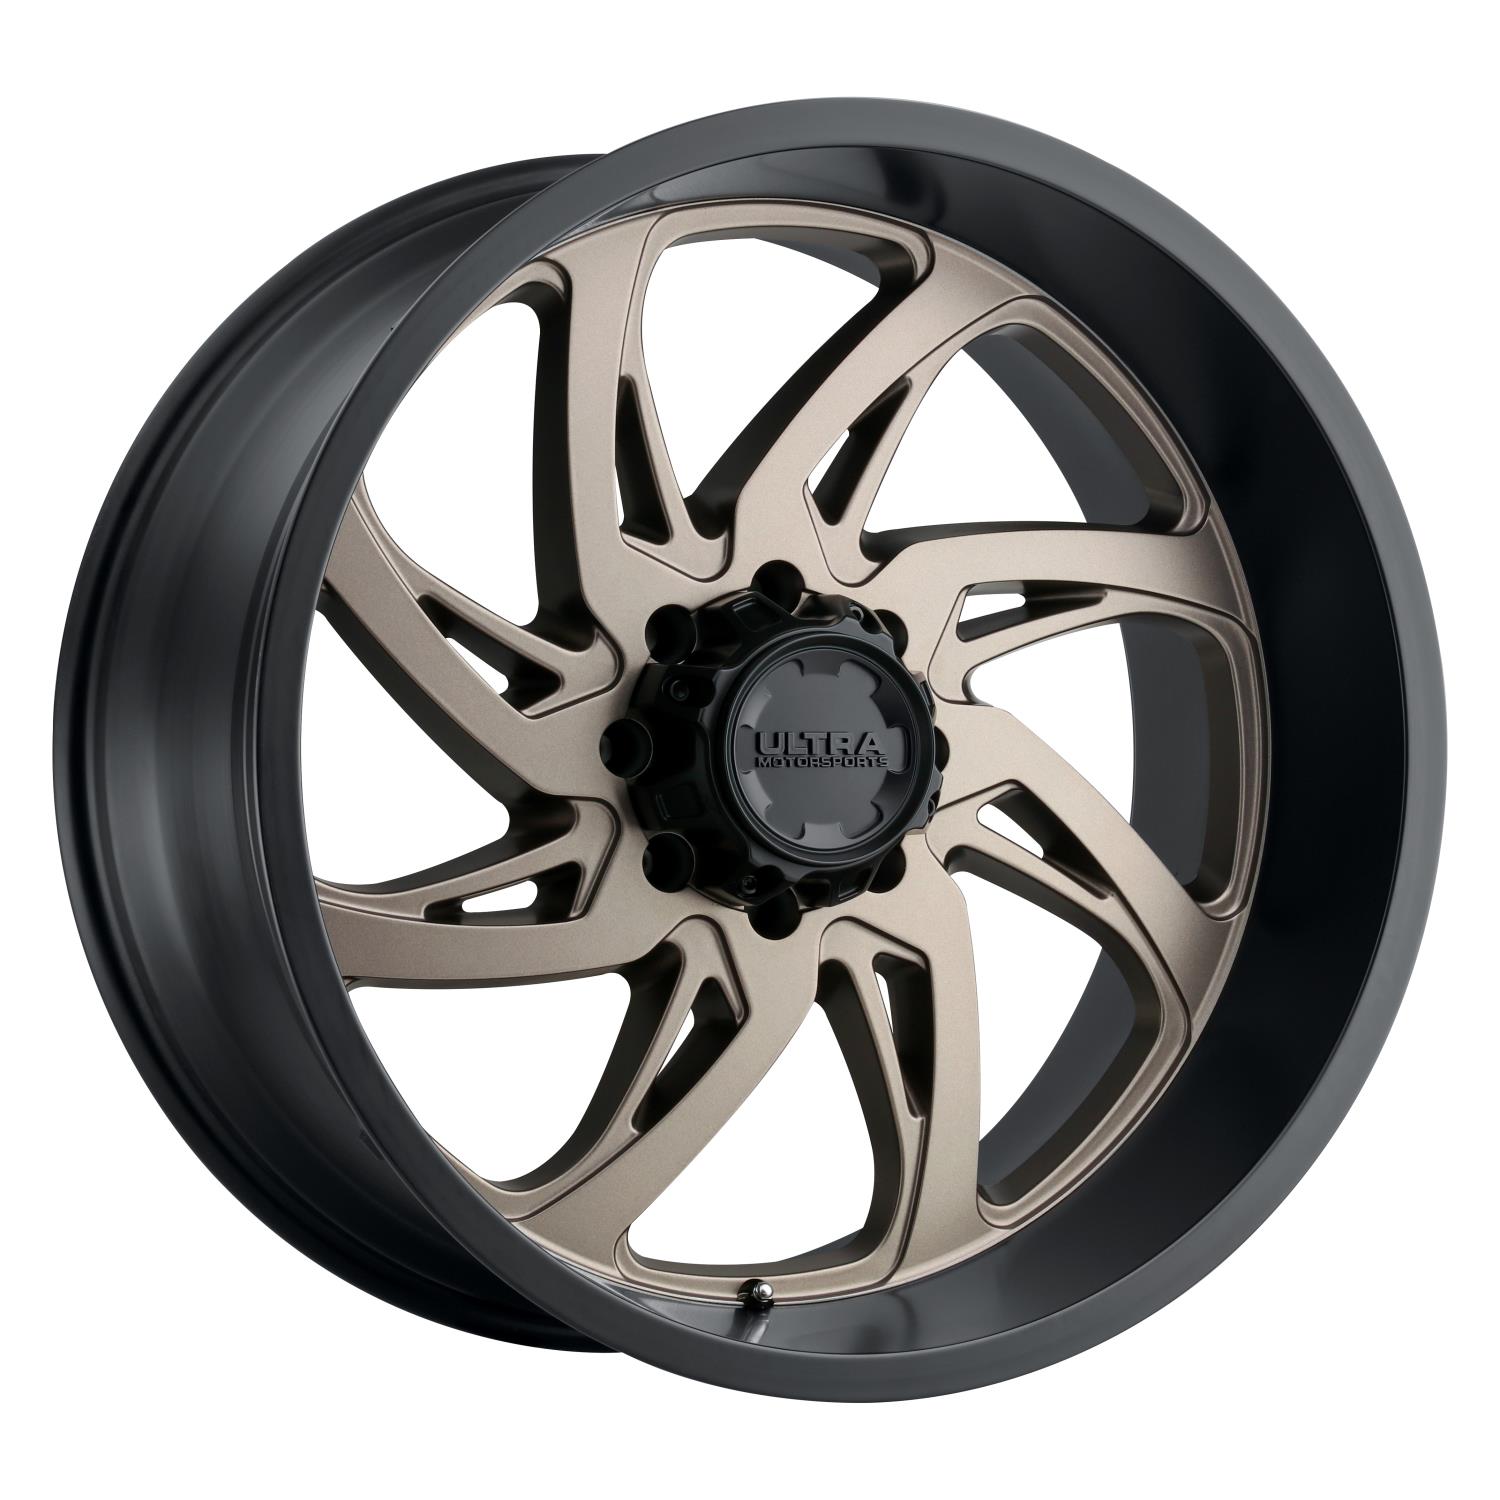 230-Series Villain Wheel, Size: 20x9", Bolt Pattern: 5x150 mm [Dark Satin Bronze w/Satin Black Lip]